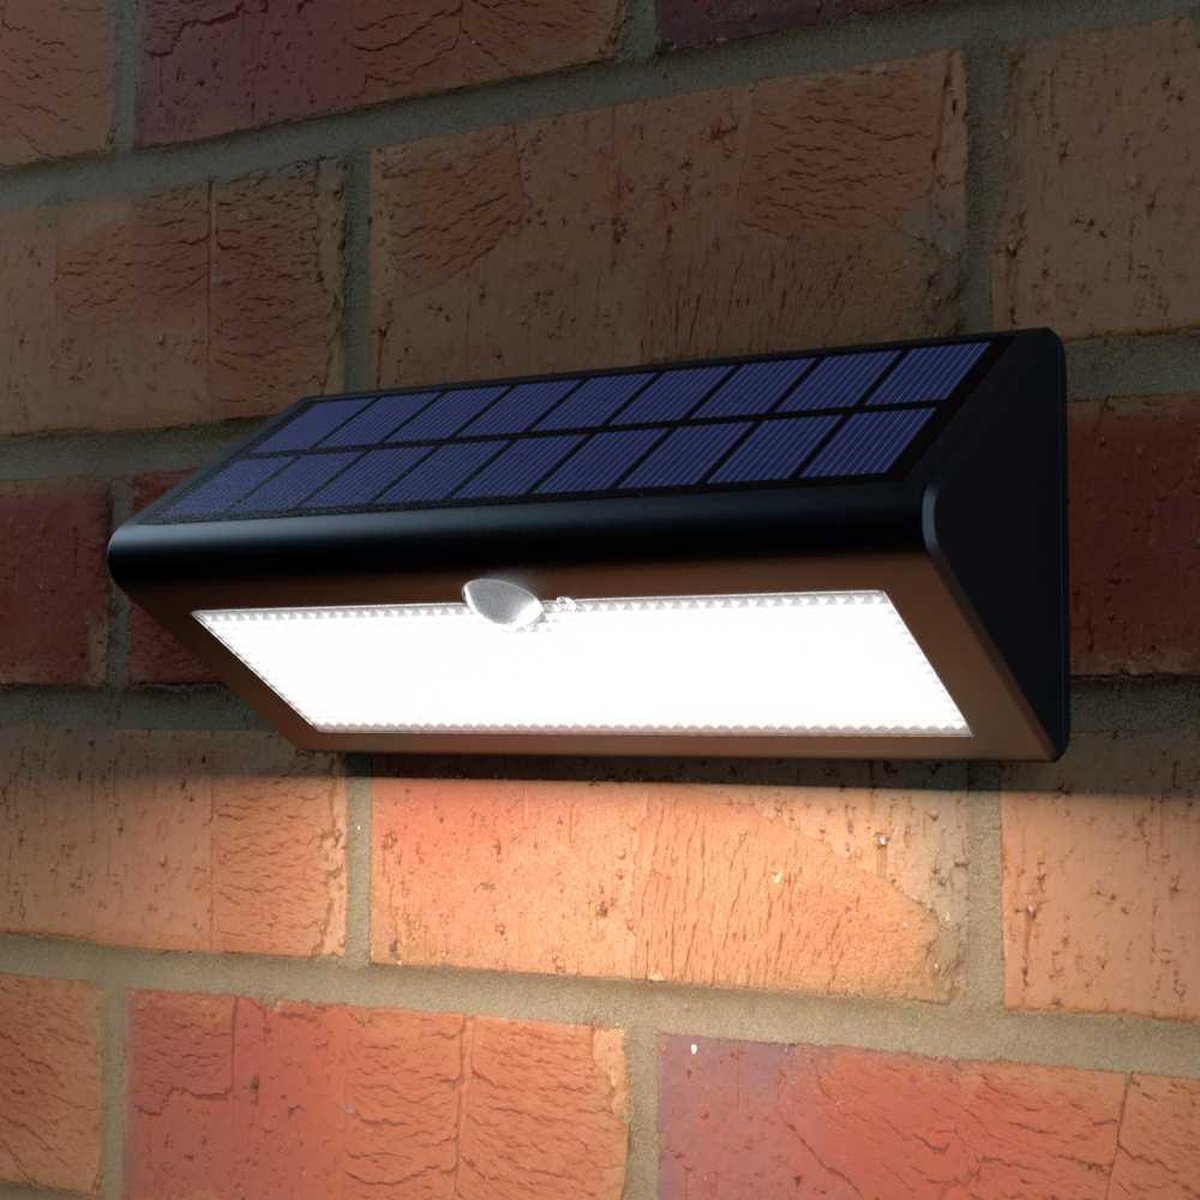 Solar wandlamp met bewegingssensor - Pro beveiligingslamp - Security lamp